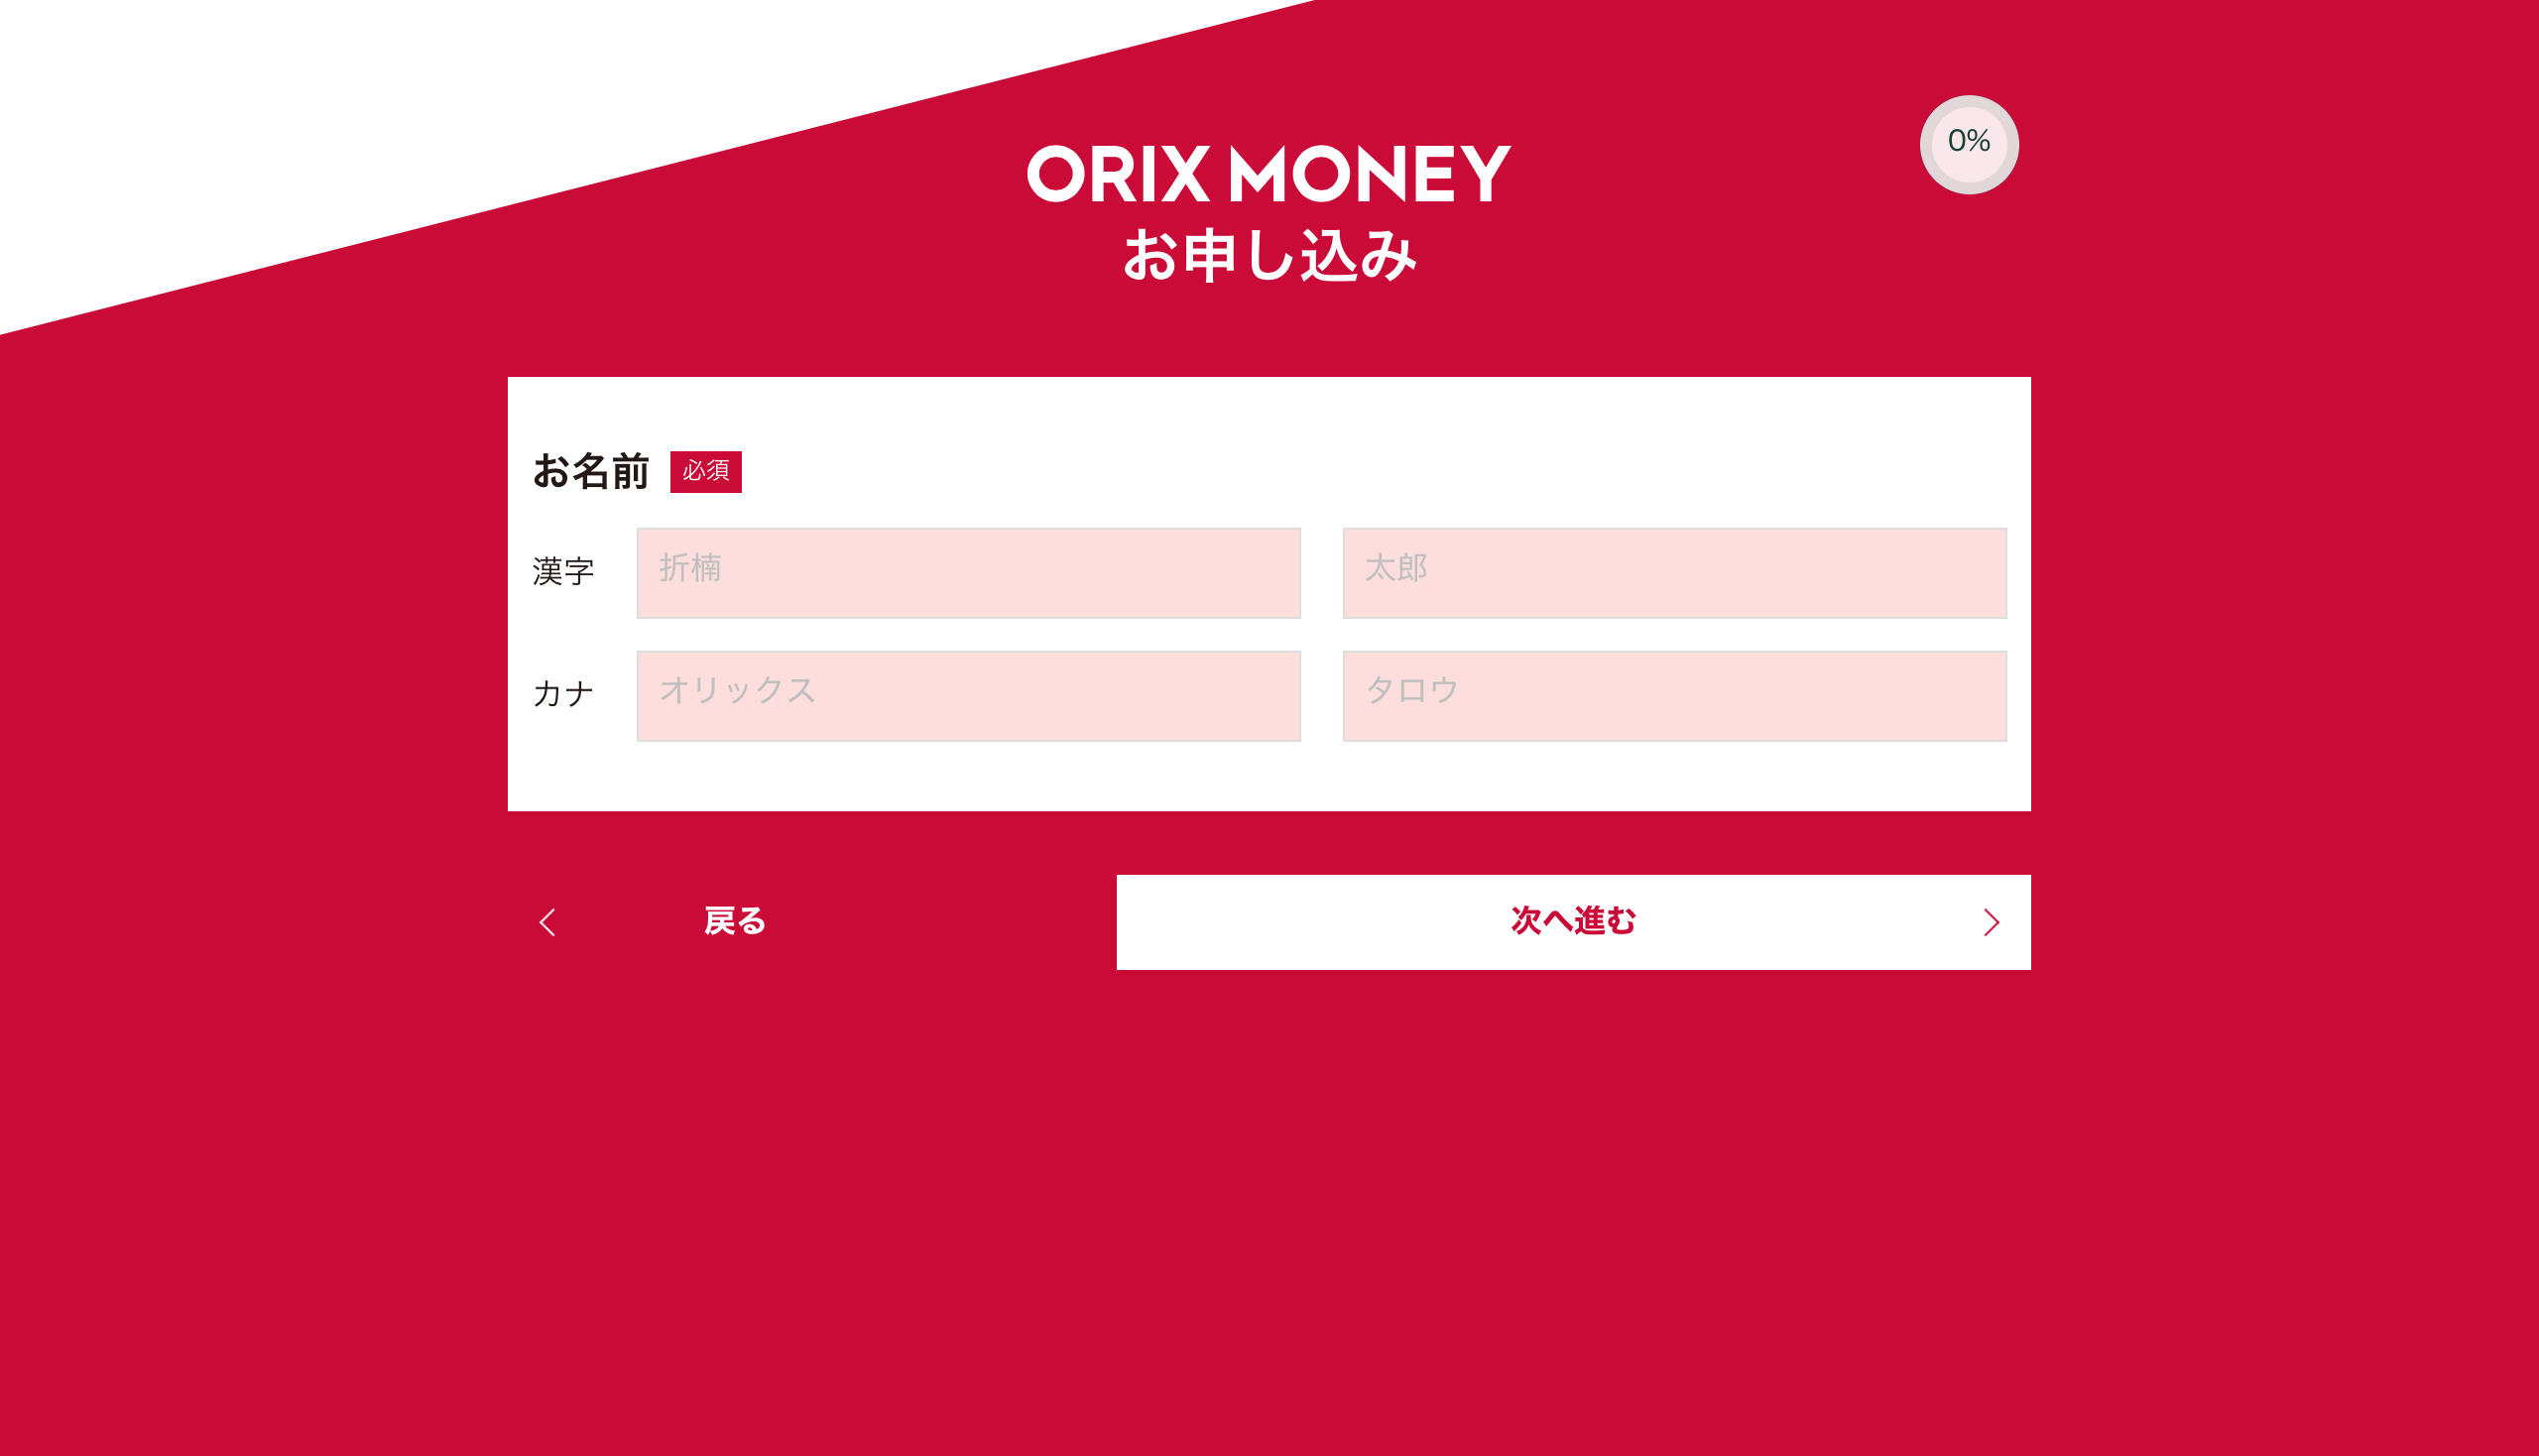 ORIX MONEY申込みフォーム